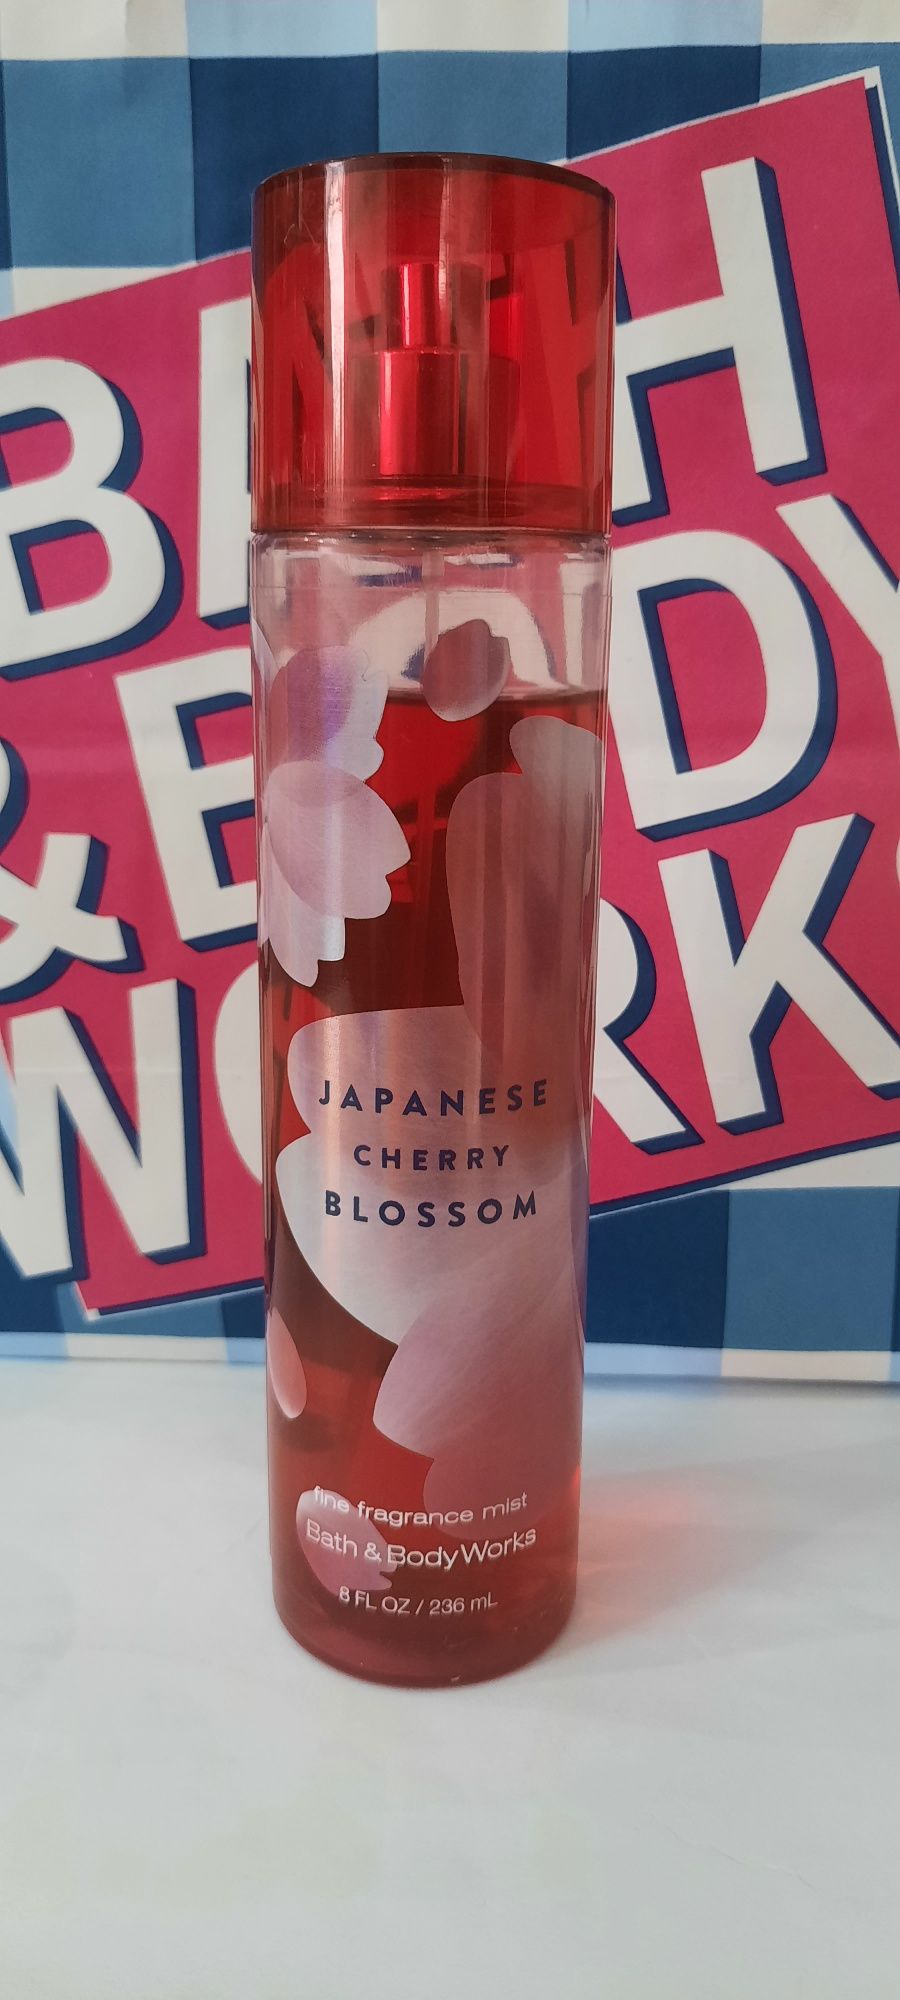 Mgiełka bath and body works Japanese Cherry Blossom